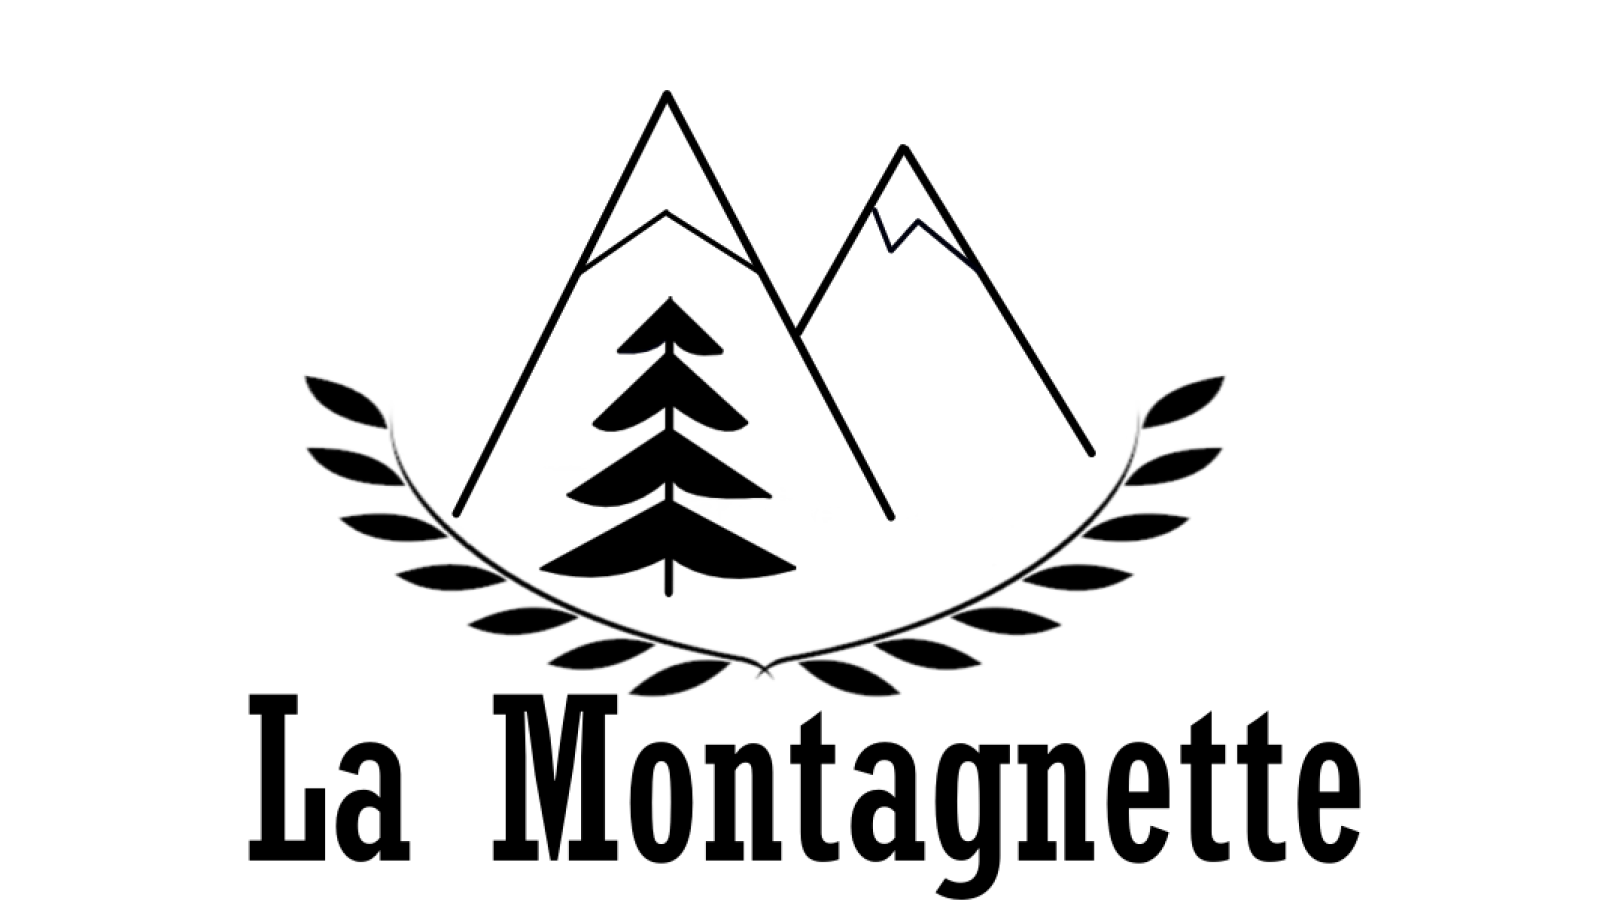 Logo de la Montagnette